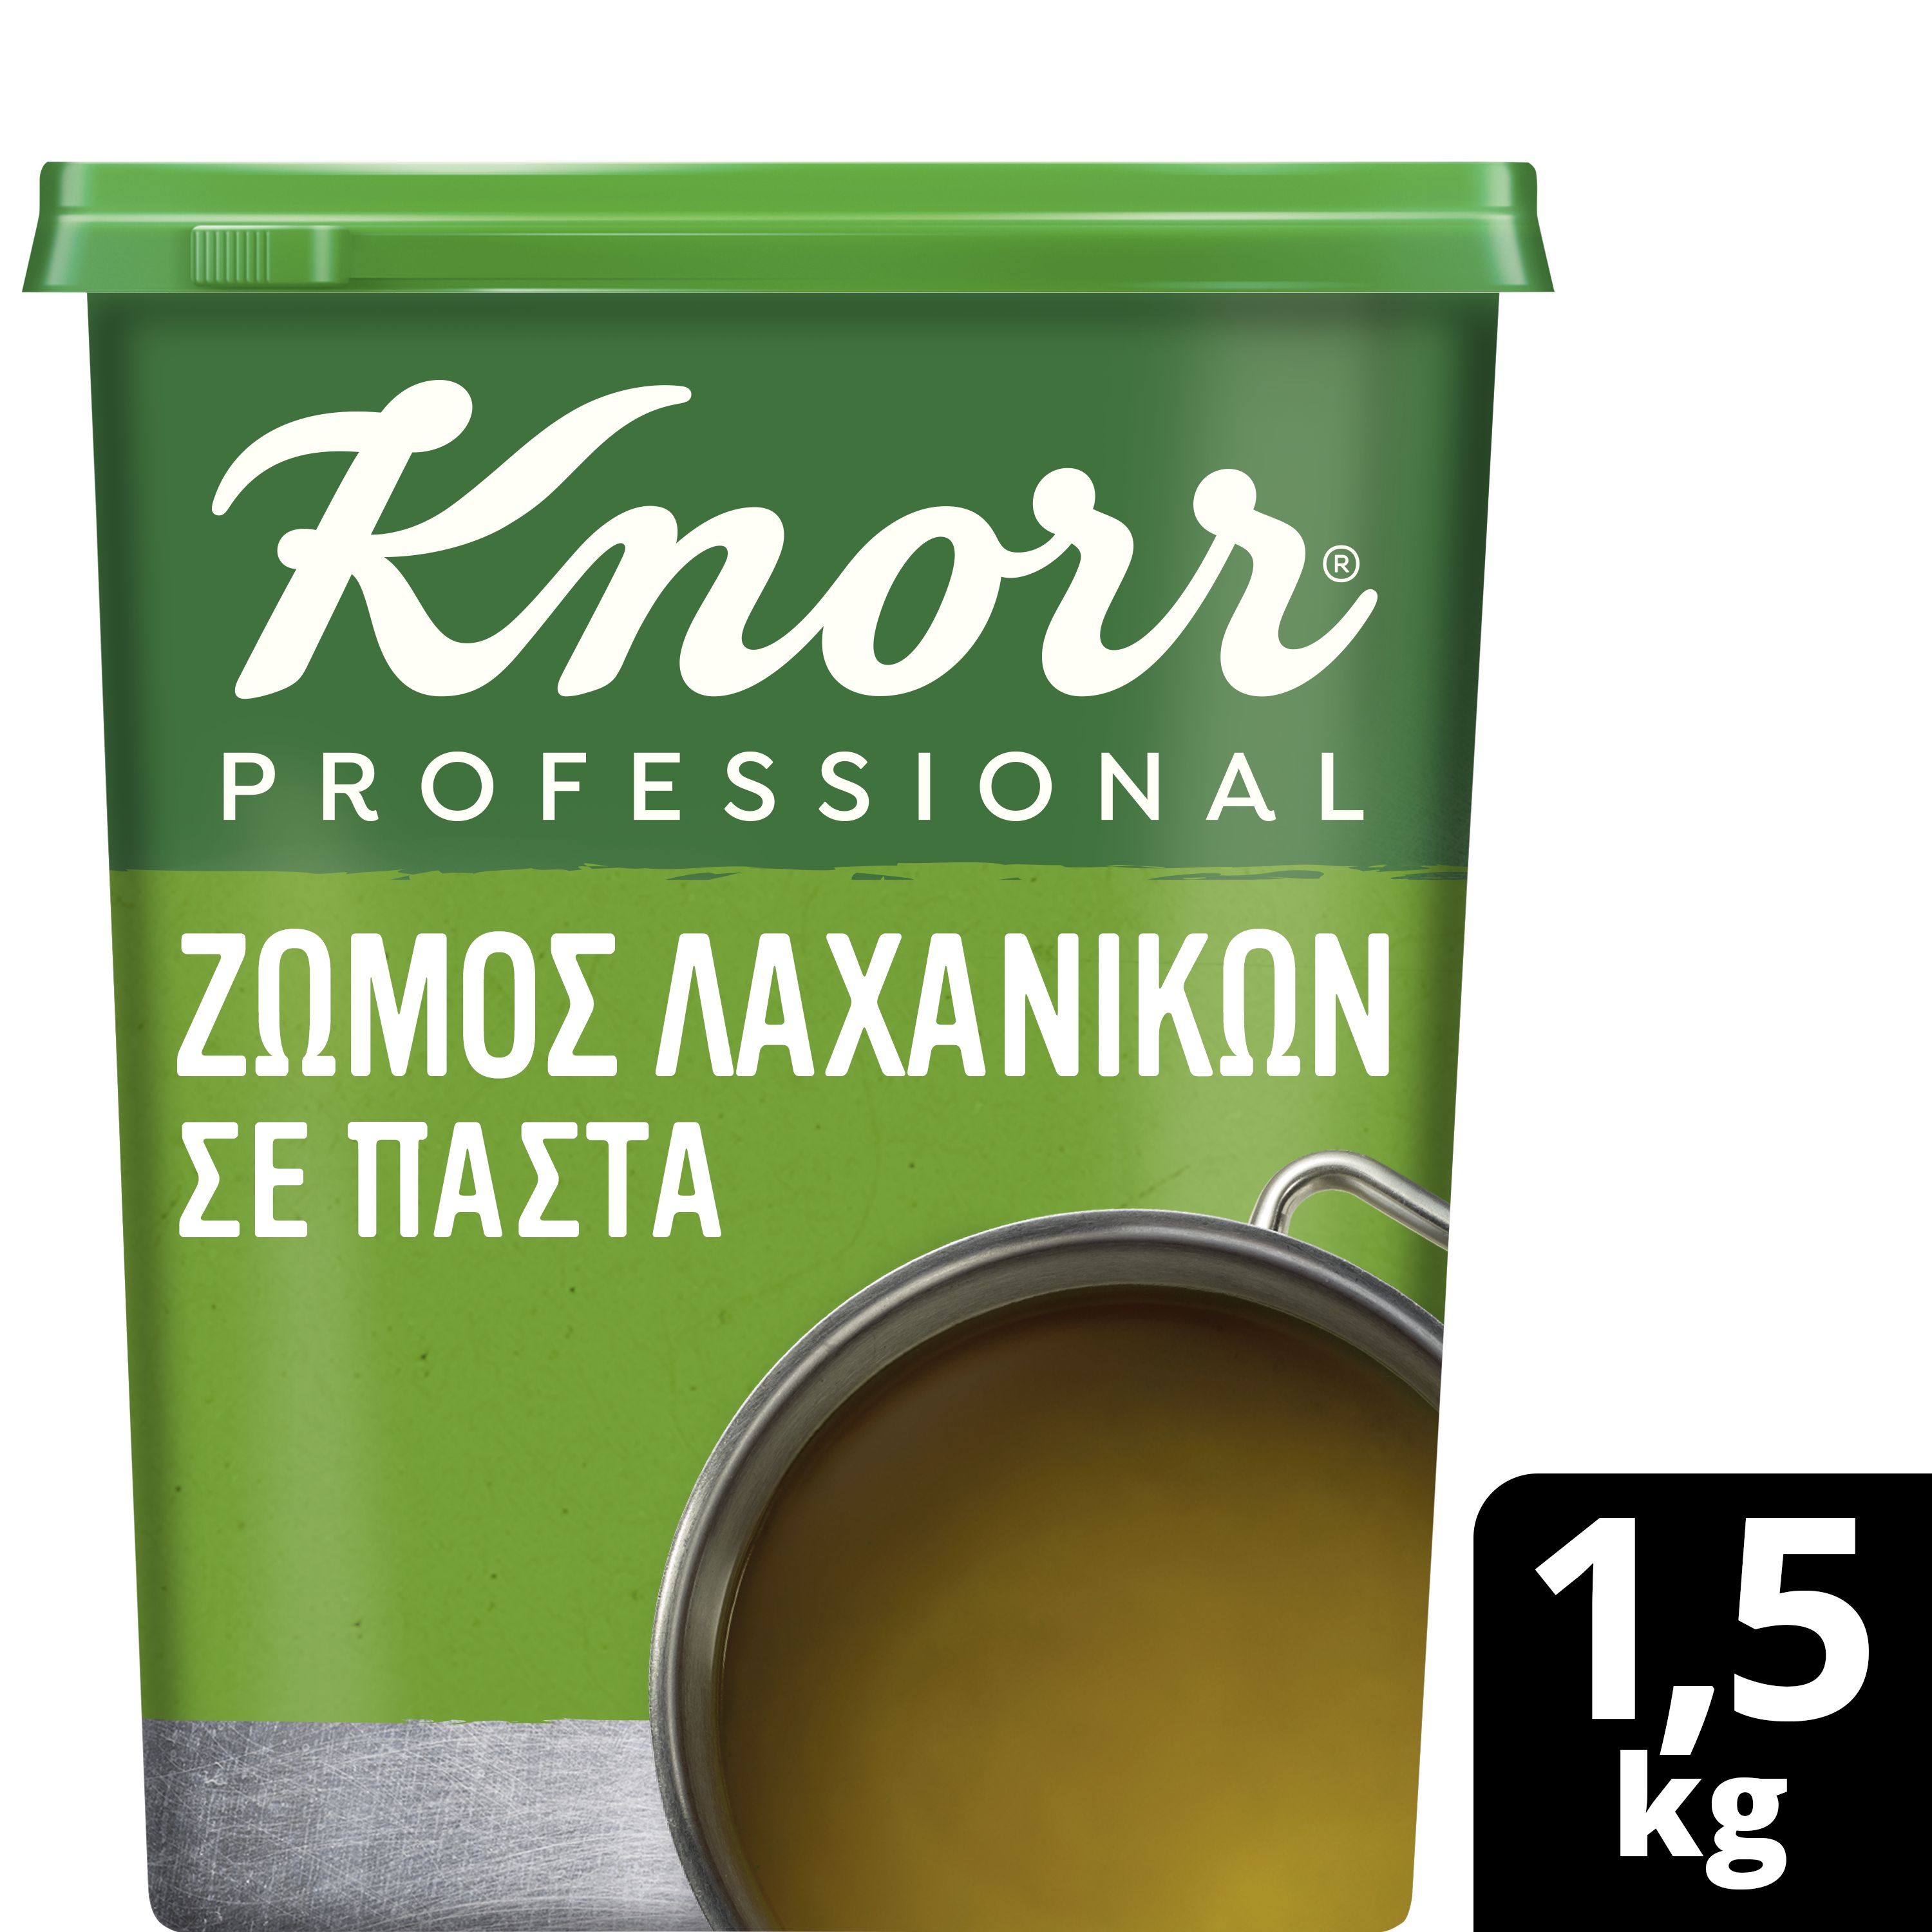 Knorr Ζωμός Λαχανικών σε Πάστα 1,5 kg - 